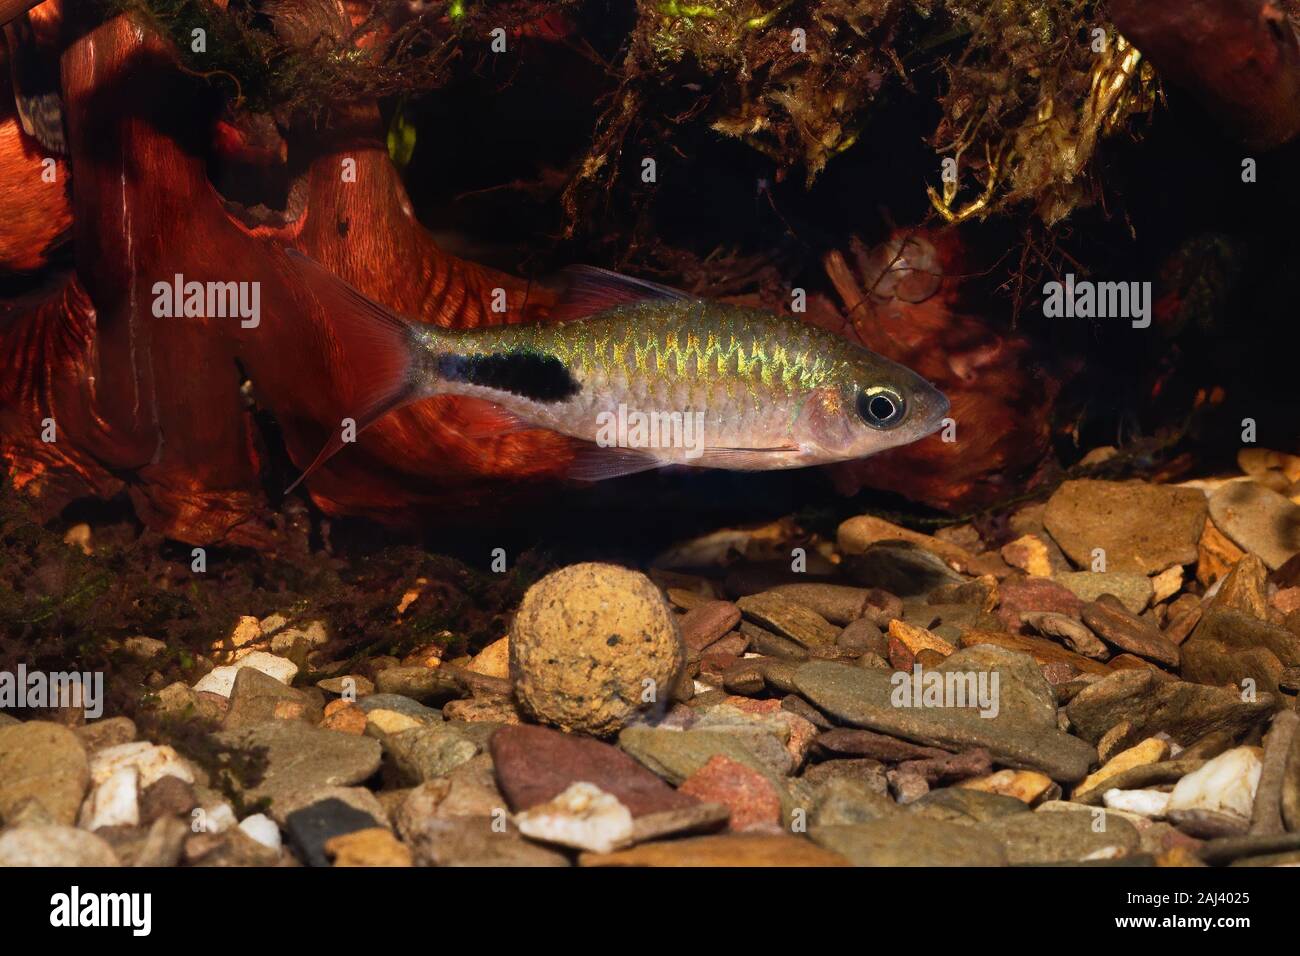 Cyprinid fish Enteromius rohani in a freshwater aquarium Stock Photo